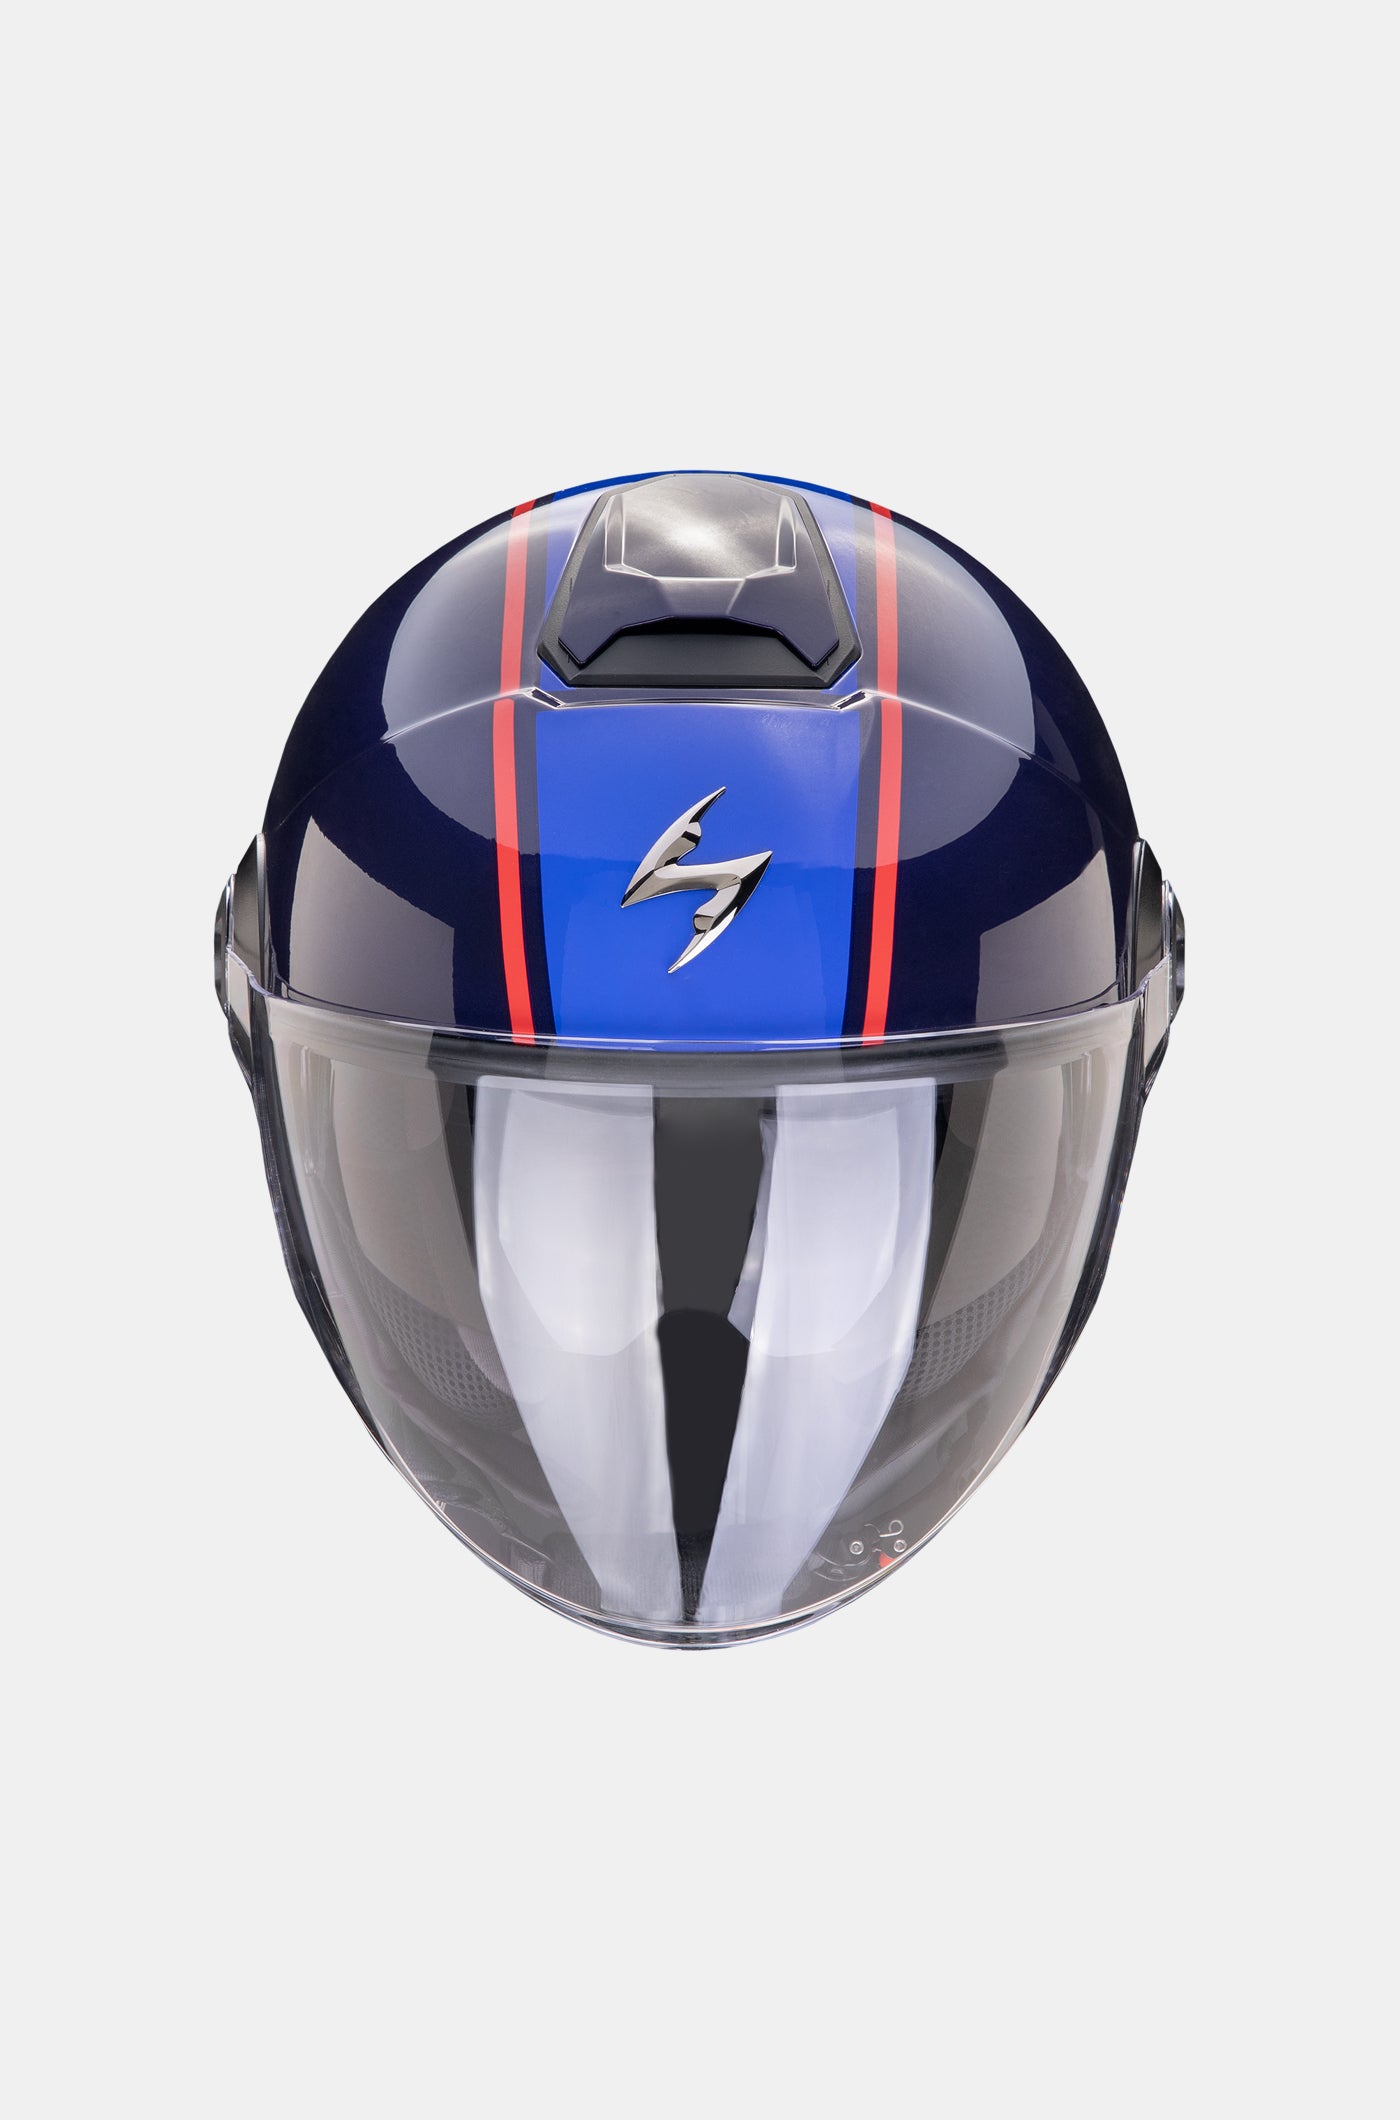 Scorpion-FC Barcelona Motorbike helmet EXO-CITY II